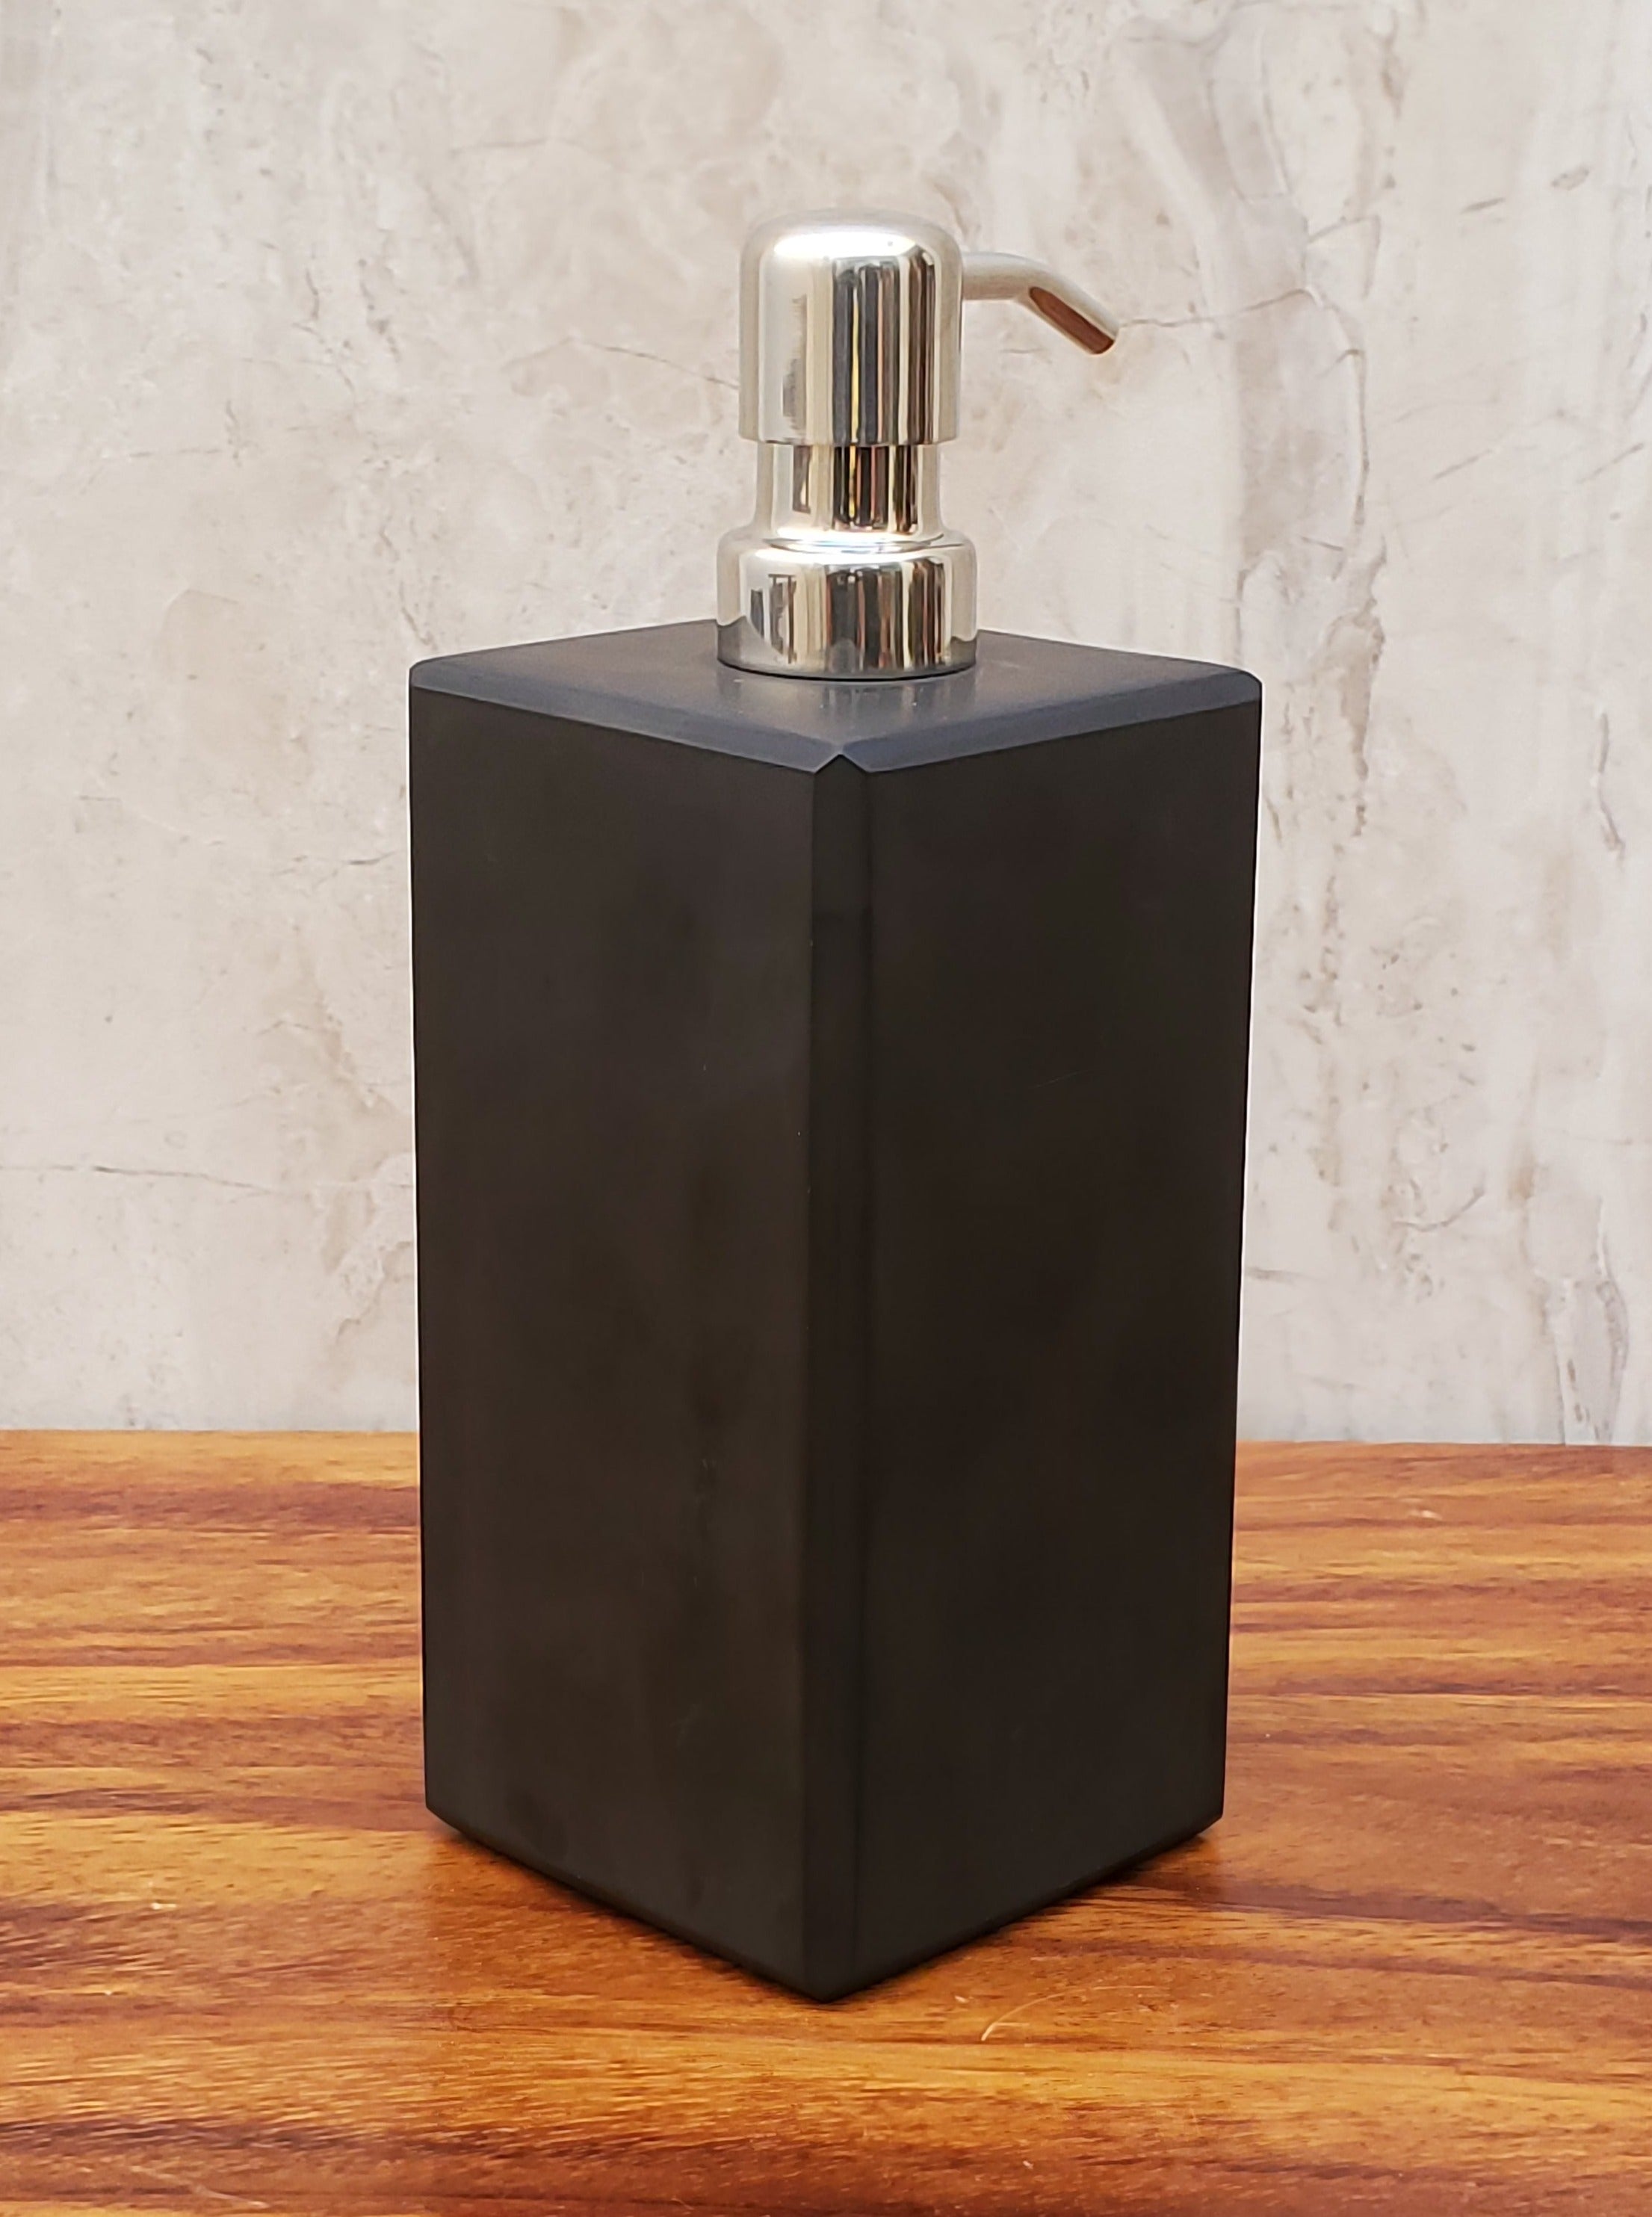 Onyx Stone Liquid Soap or Lotion Dispenser.Handmade. Fast Shipping. Buy Now at www.felipeandgrace.com.